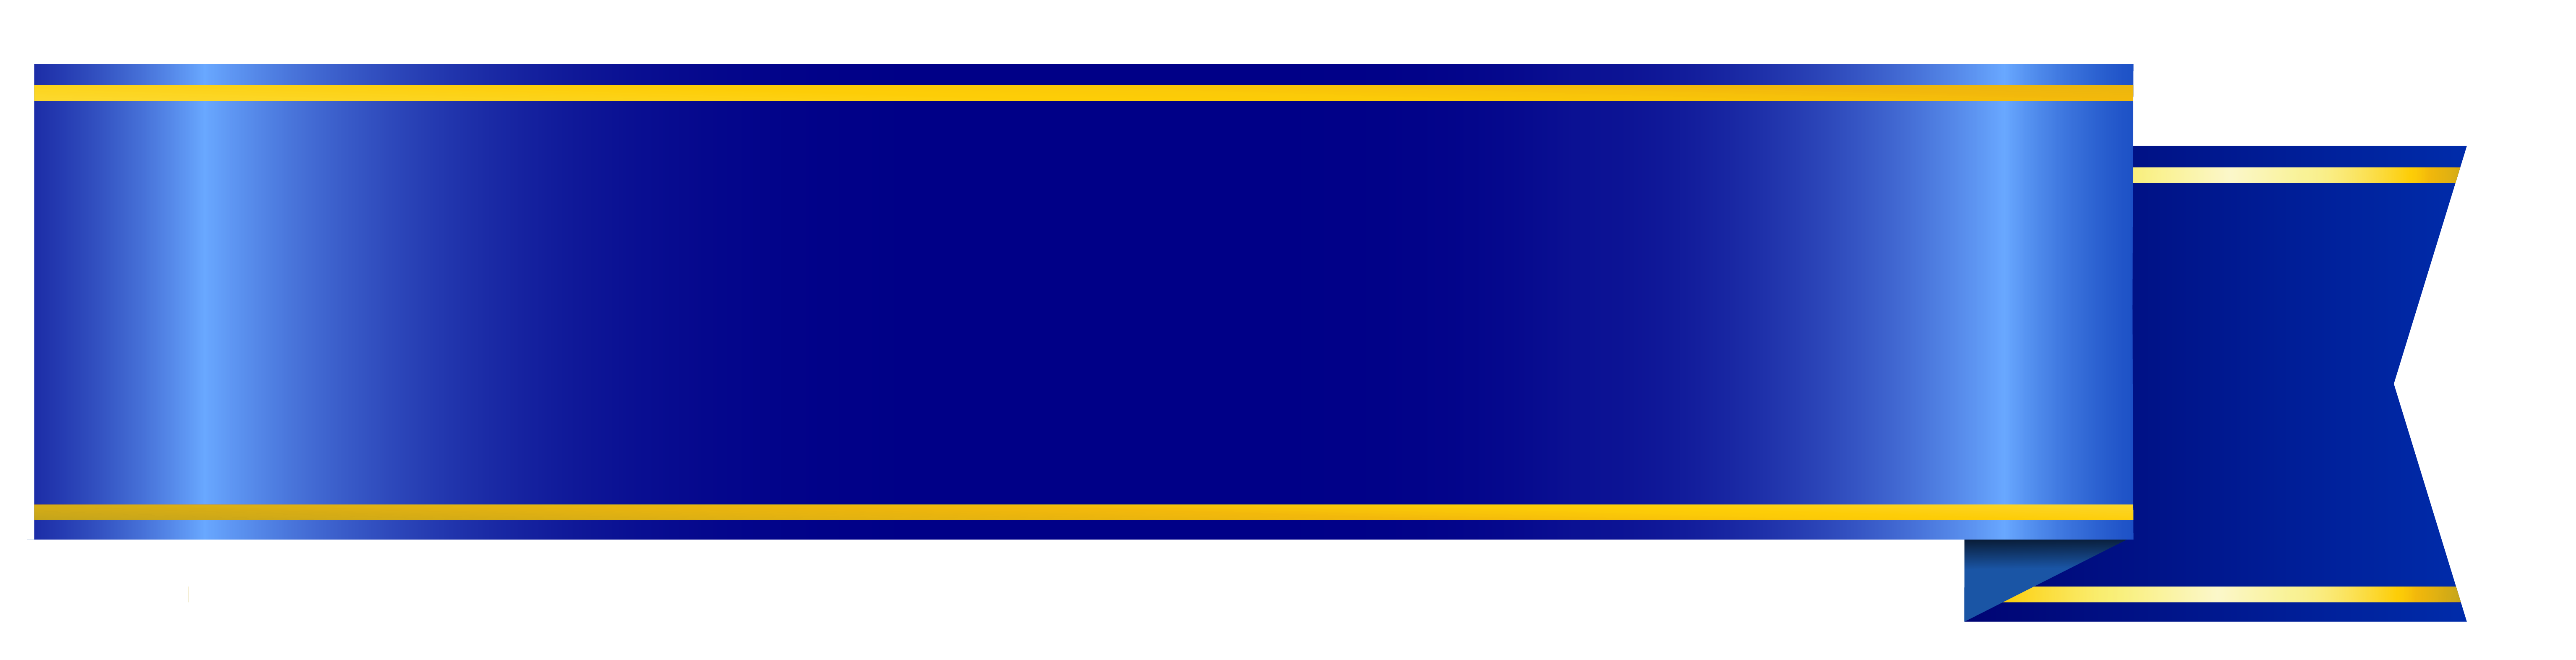 Blaues Banner PNG-Bild transparent